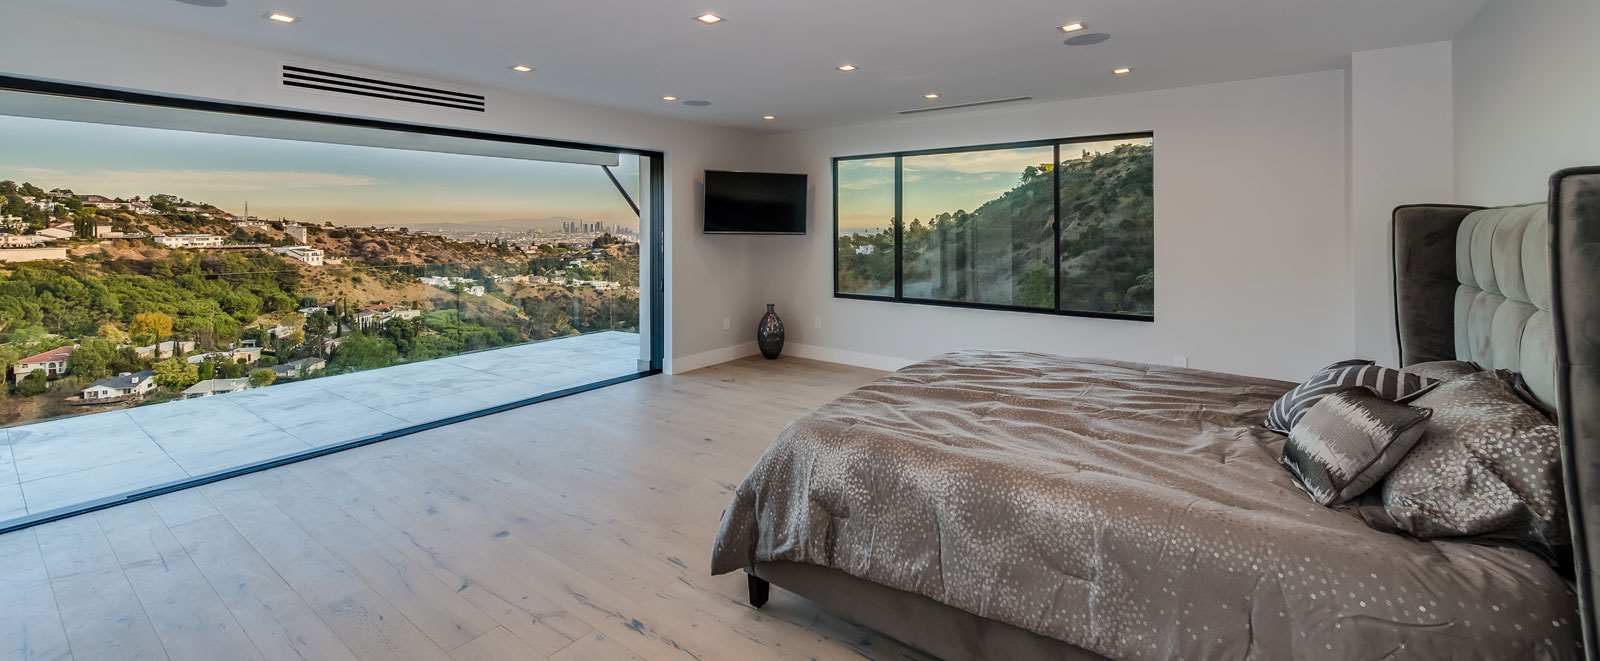 glass window wall bedroom